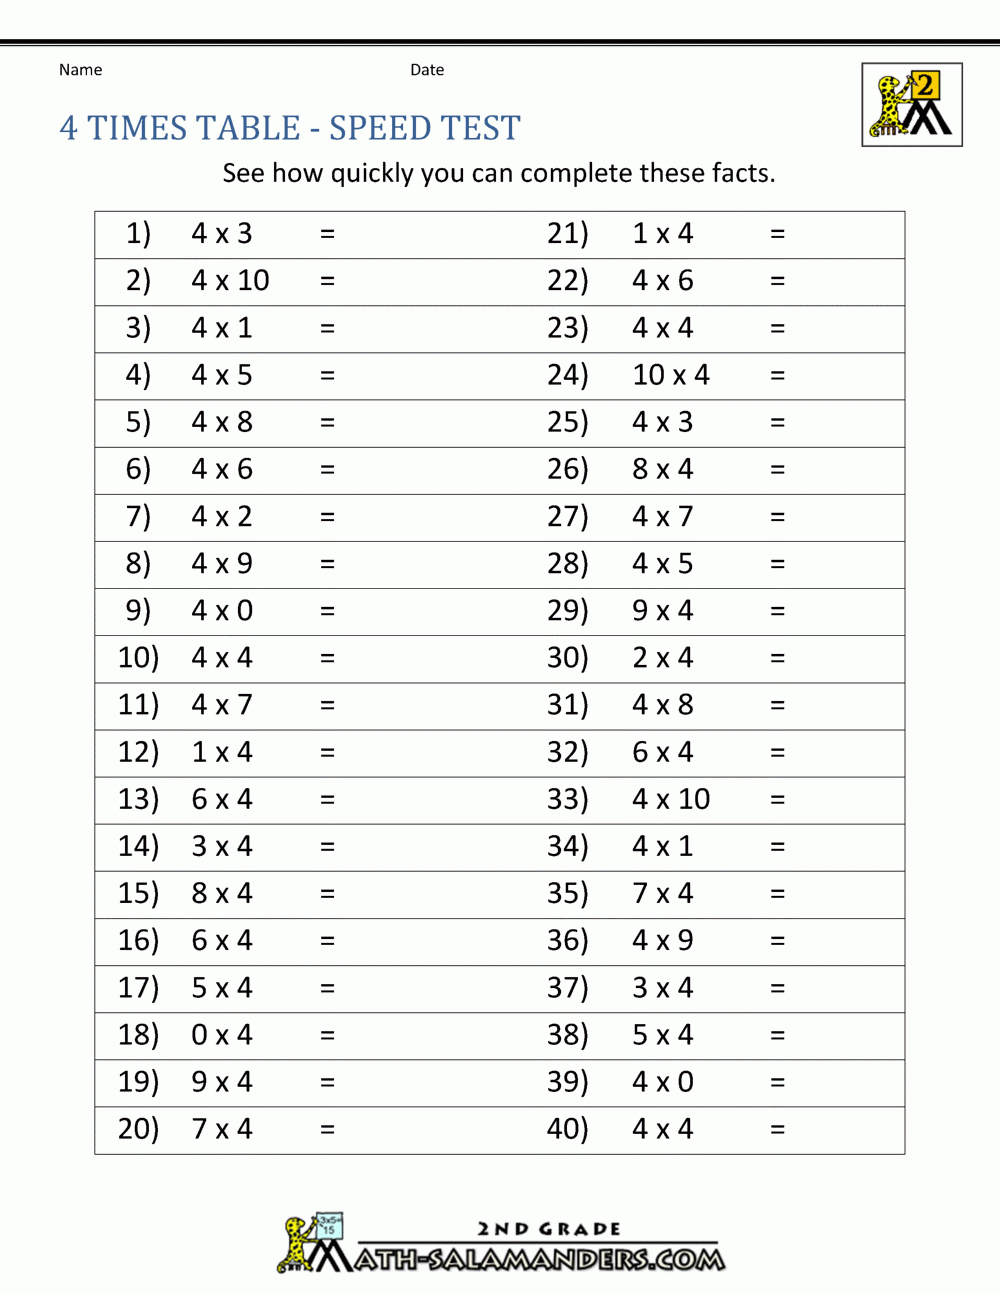 4 Times Table - 2Nd Grade Math Salamanders inside Printable Multiplication Worksheets 4's